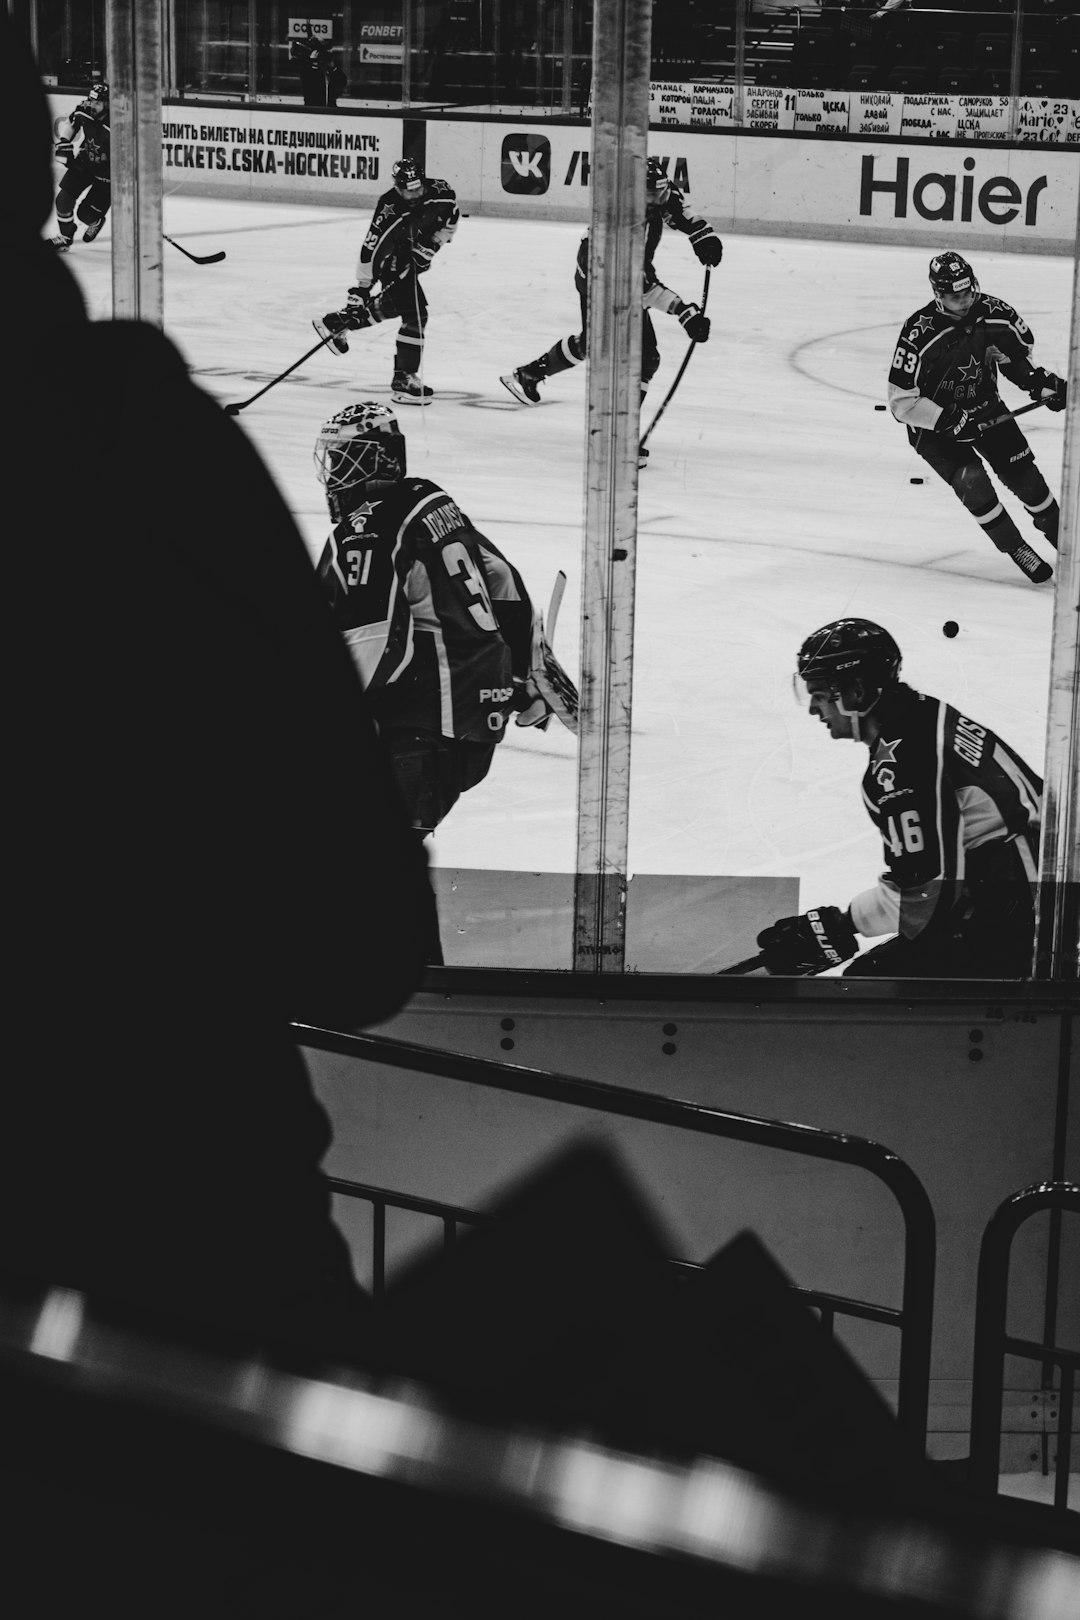 grayscale photo of 2 men playing hockey